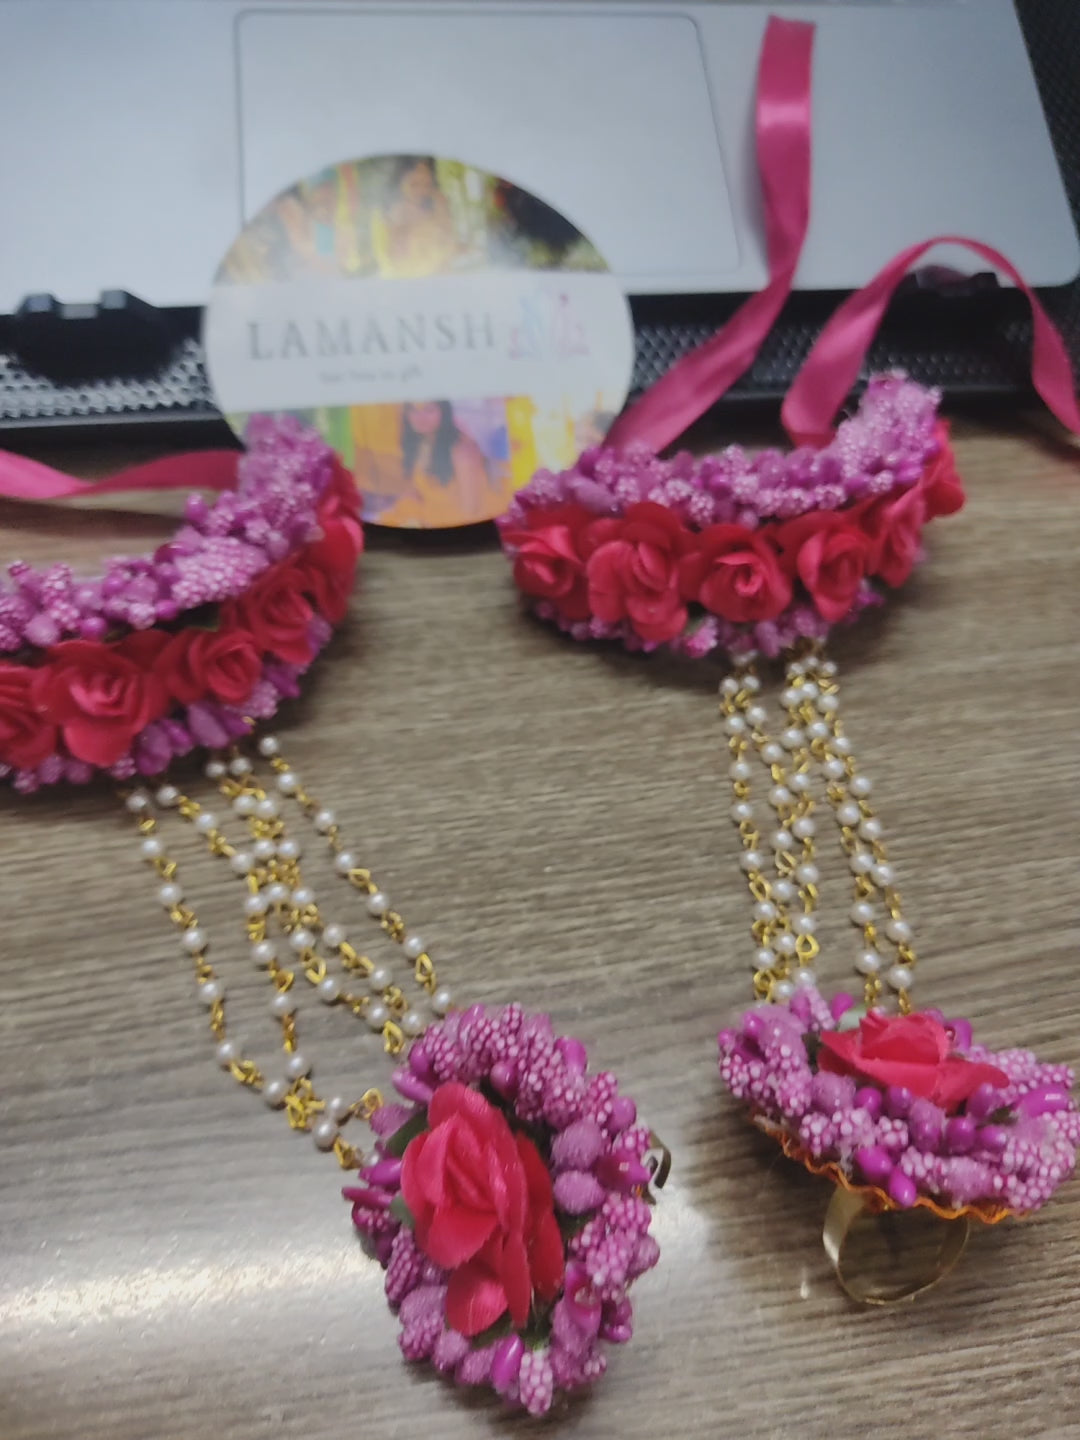 LAMANSH Artificial Pink Fabric Flowers Hathphools for Giveaways in Haldi & Mehendi ceremony